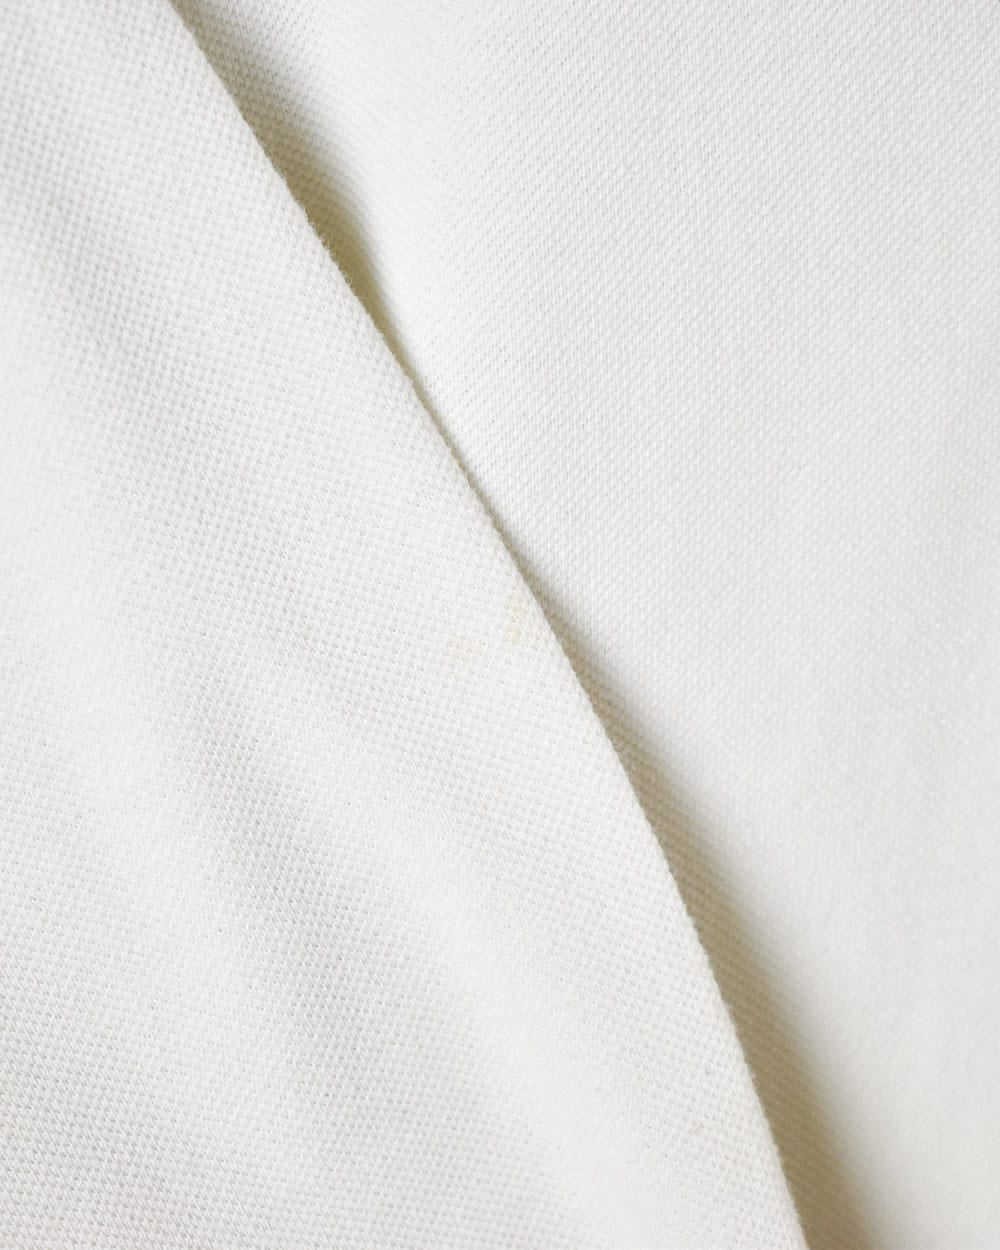 White Nike Polo Shirt - X-Large